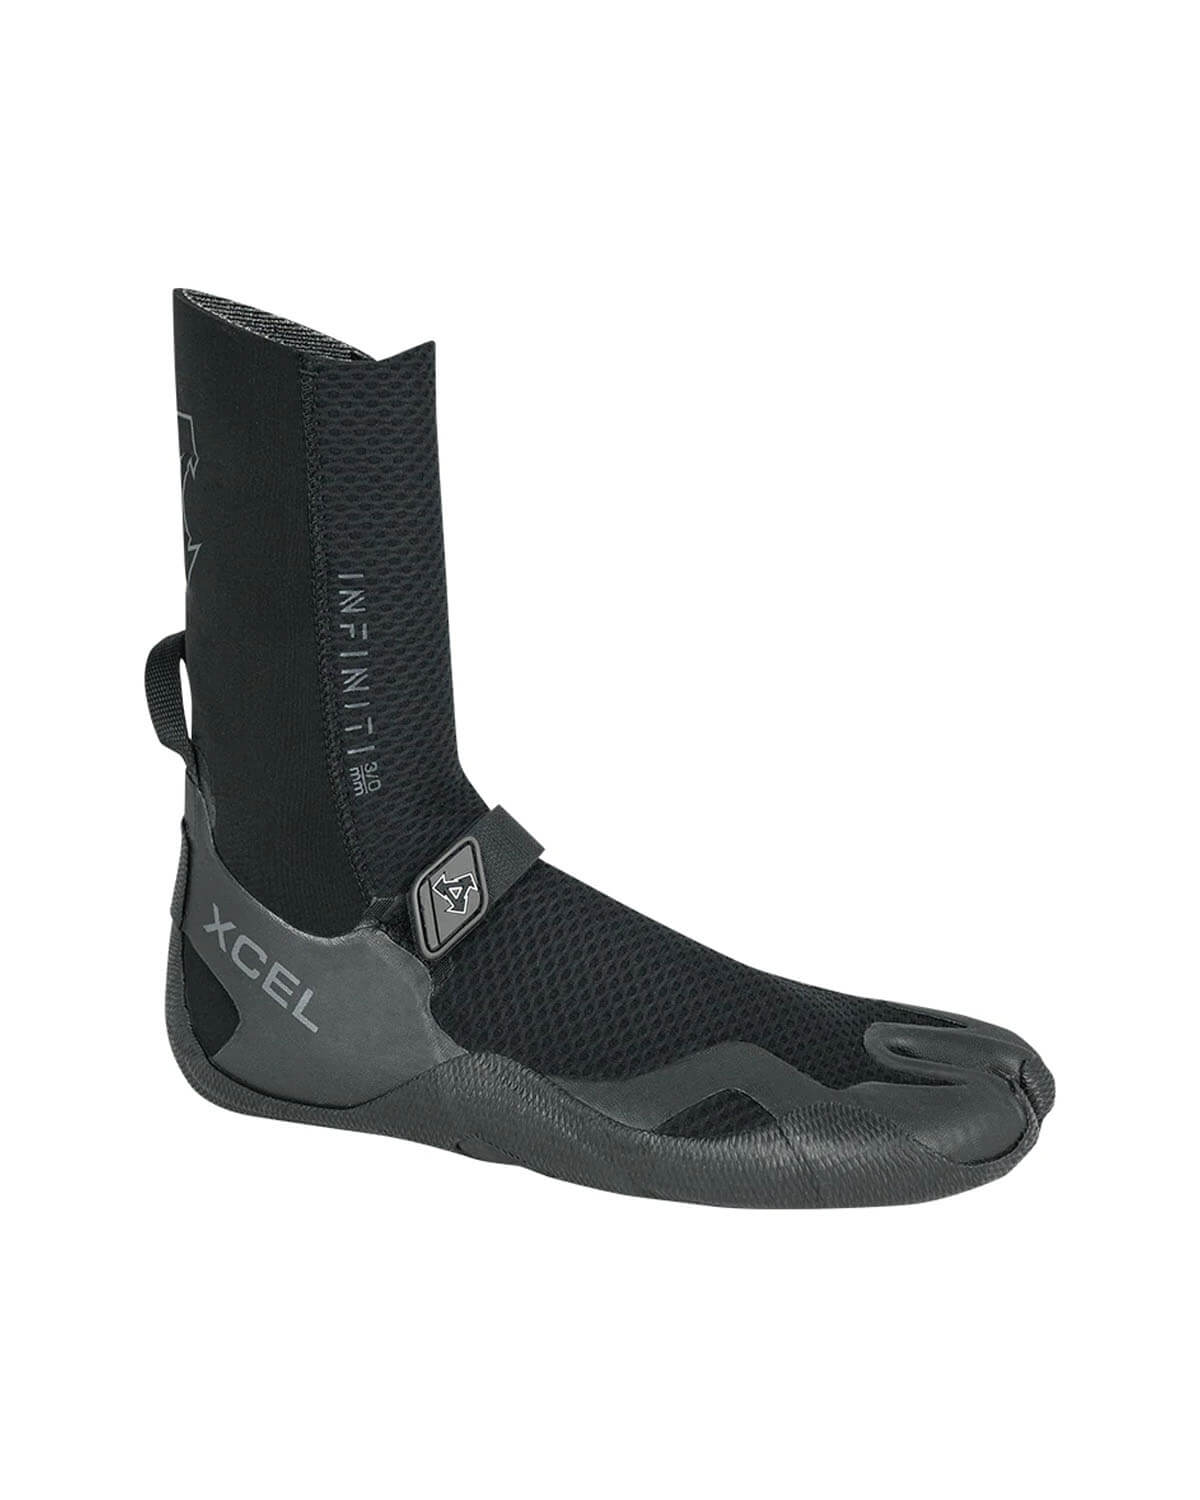 3mm XCEL INFINITI Split Toe Wetsuit Boots